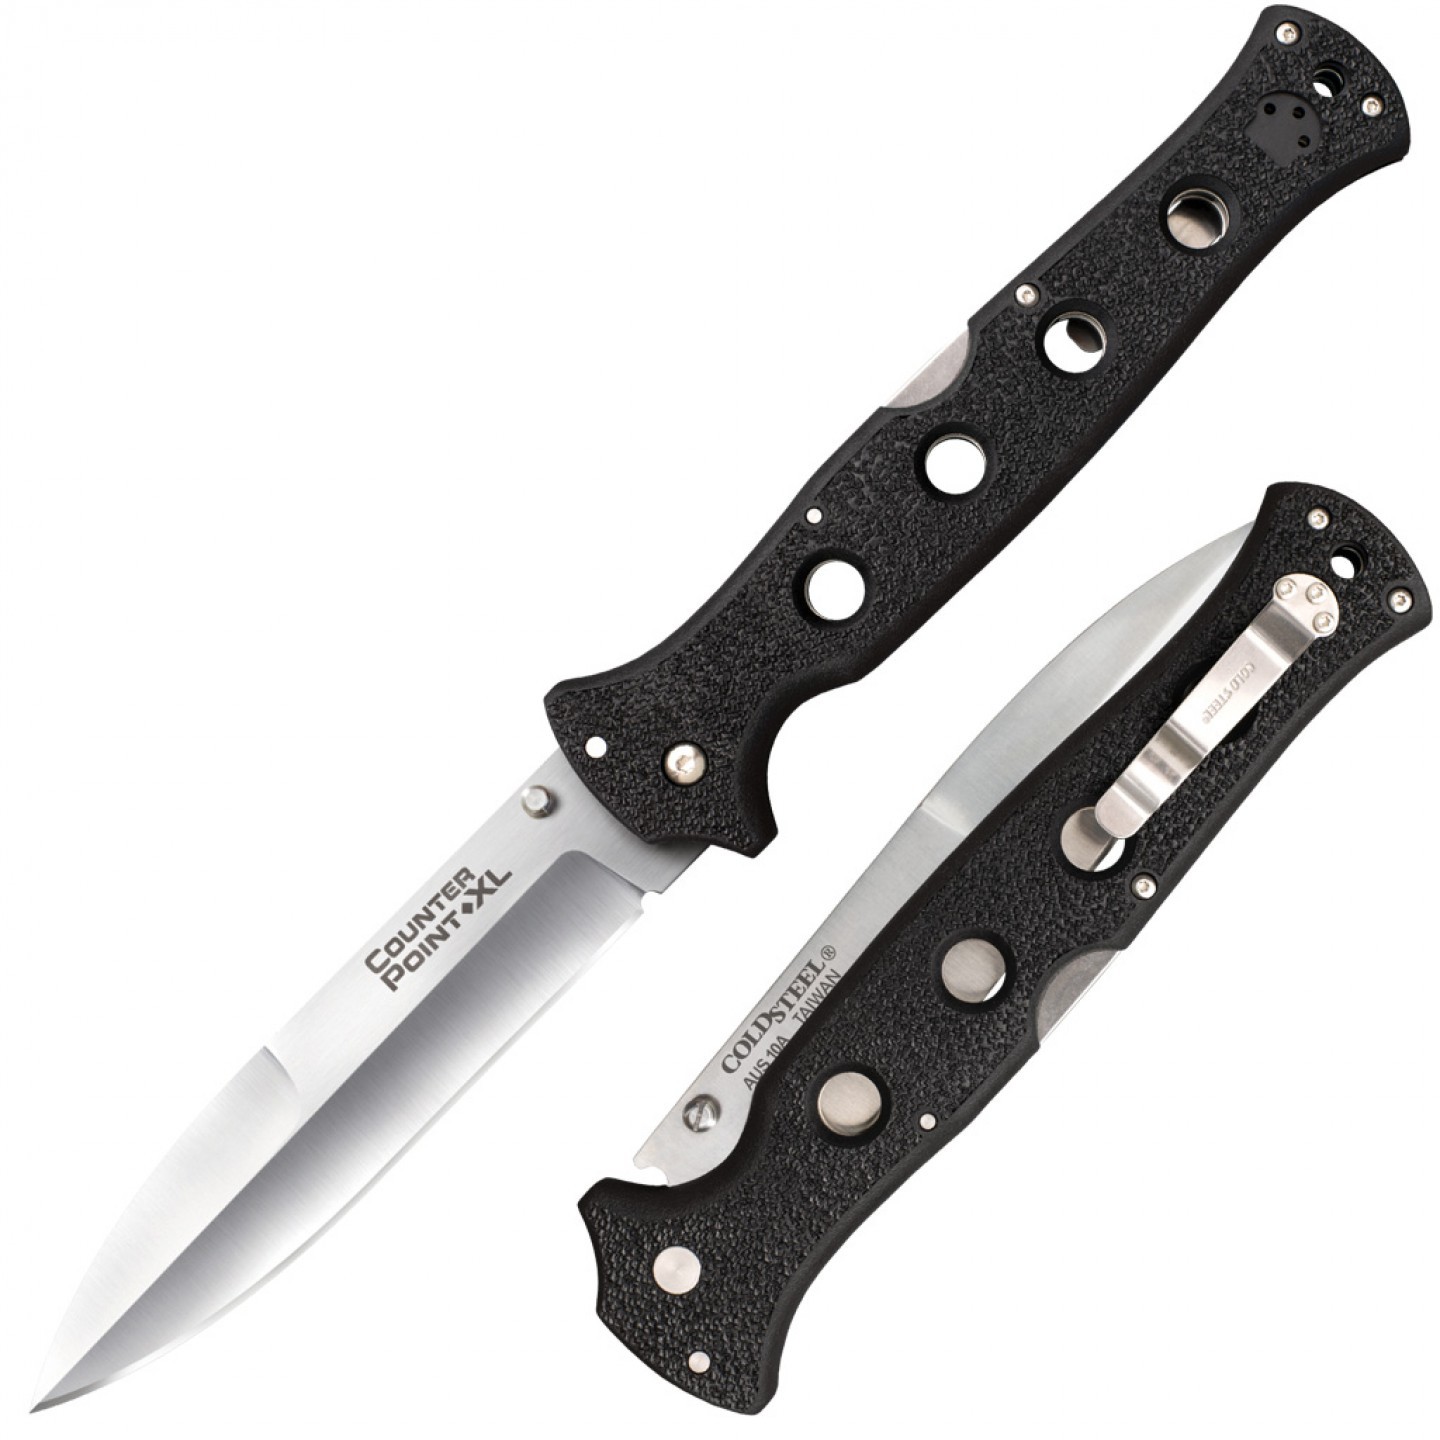 Нож складной Cold Steel Counter Point XL, сталь AUS-10A, рукоять grivory, black нож складной boker takara g10 сталь d2 рукоять g10